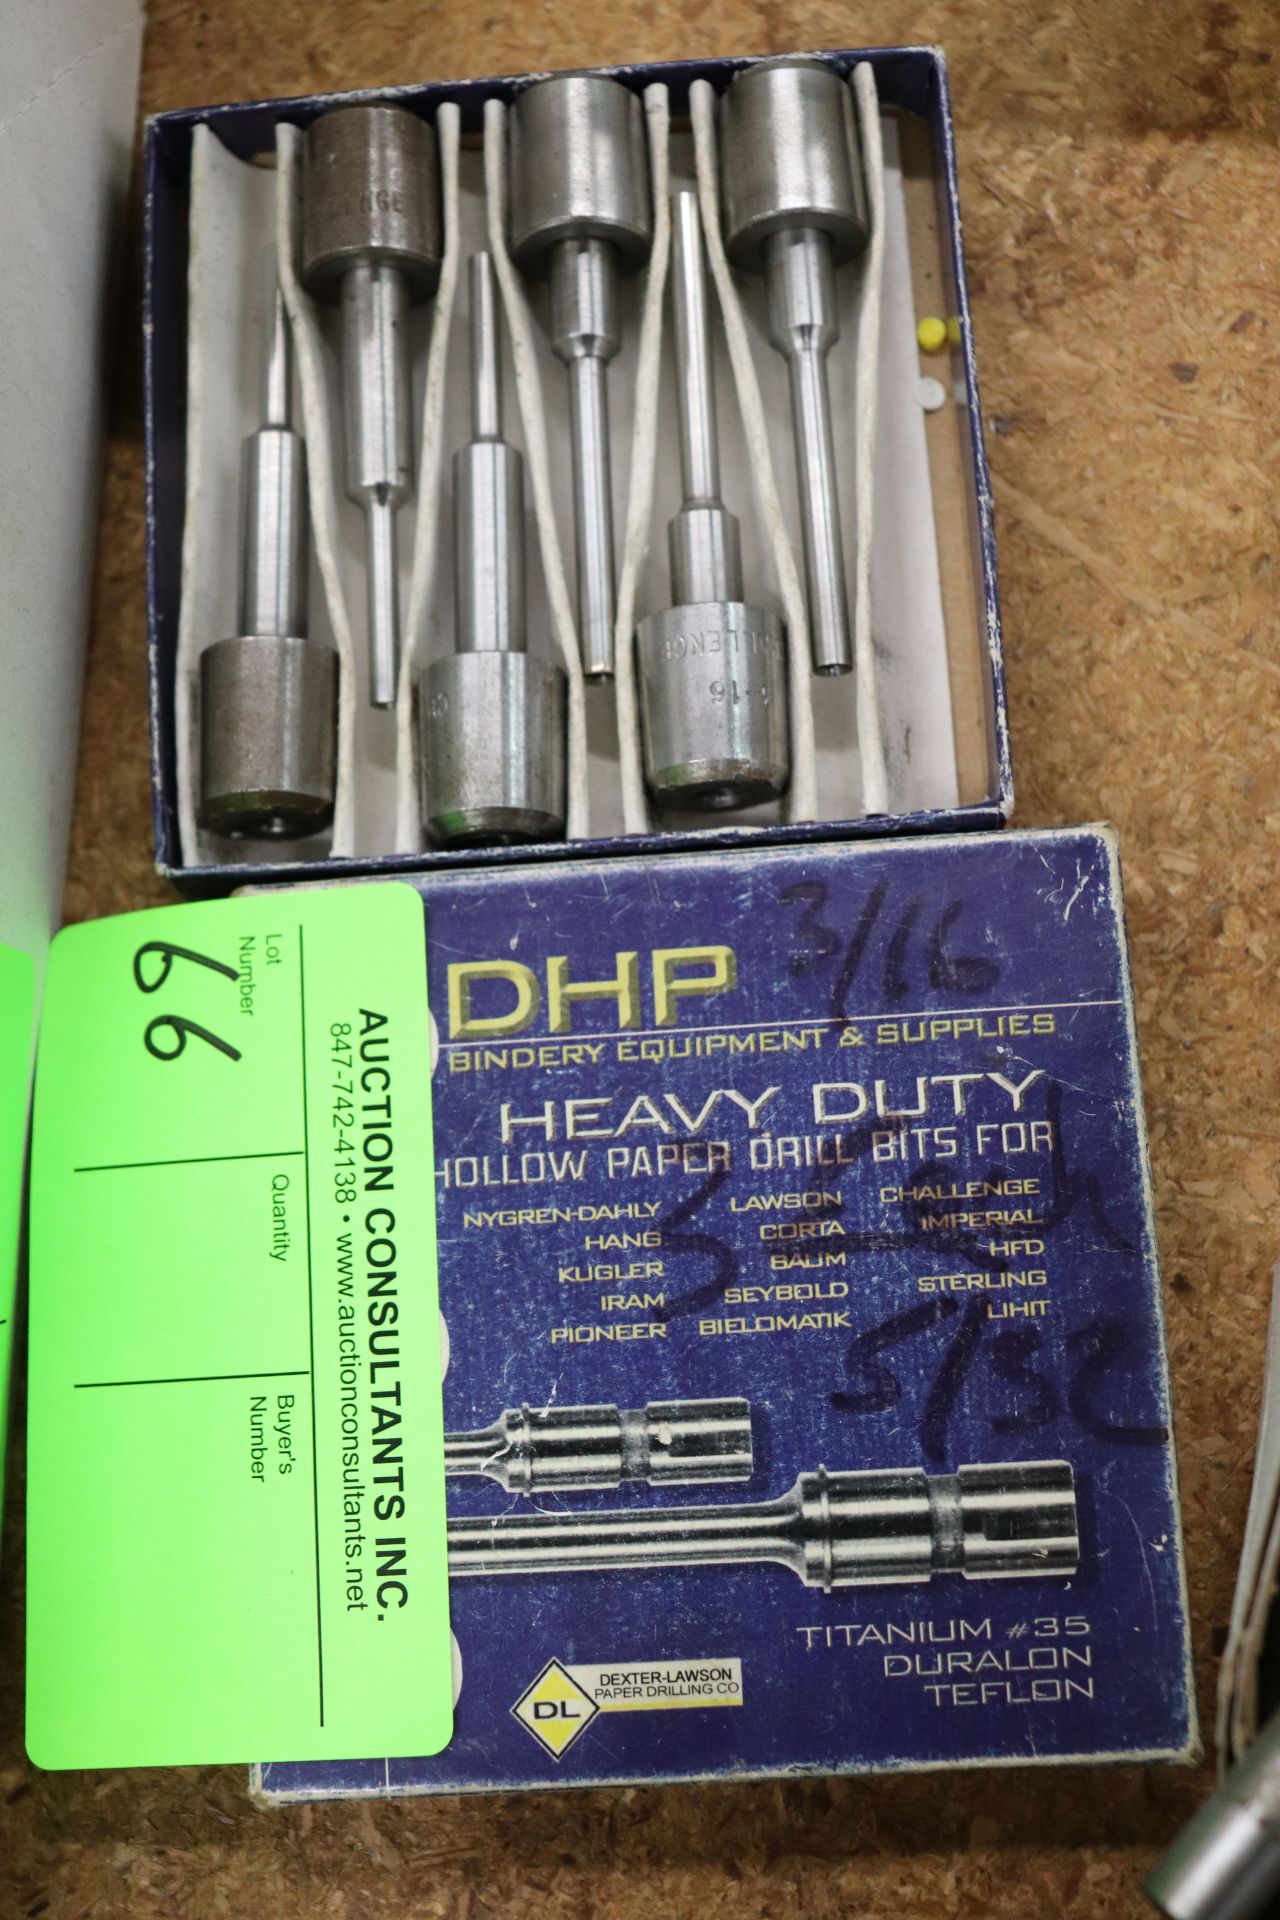 Heavy duty hollow paper drill bits, titanium #35